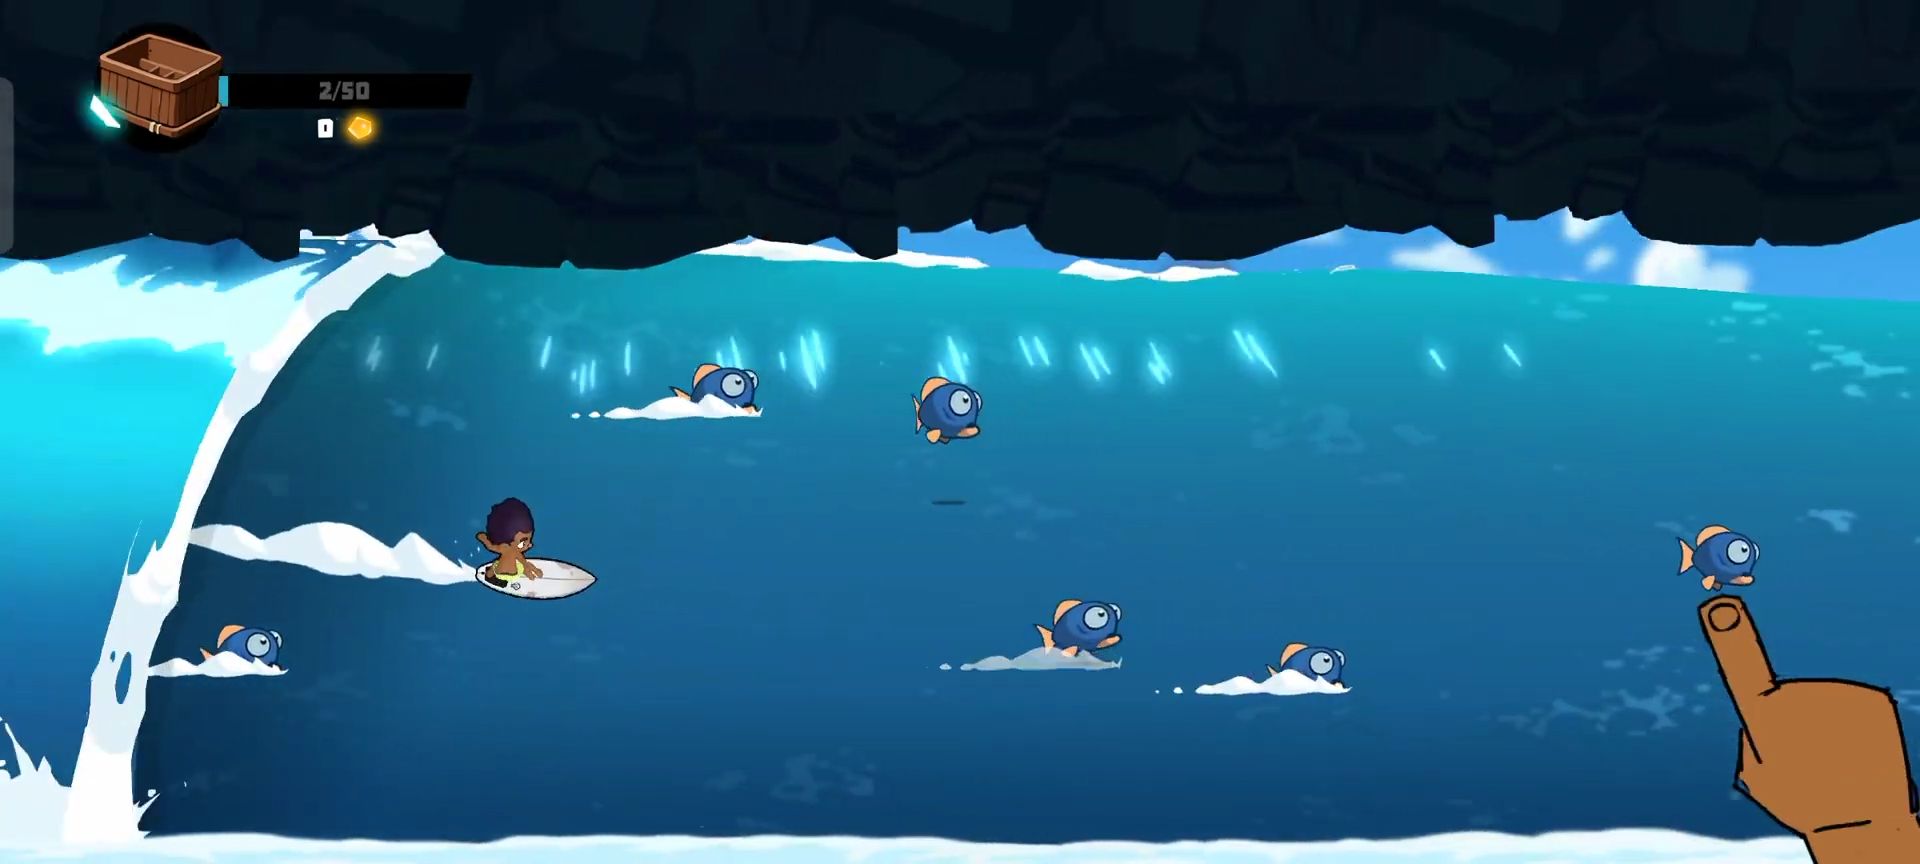 Sushi Surf - Endless Run Fun Android iOS Gameplay 